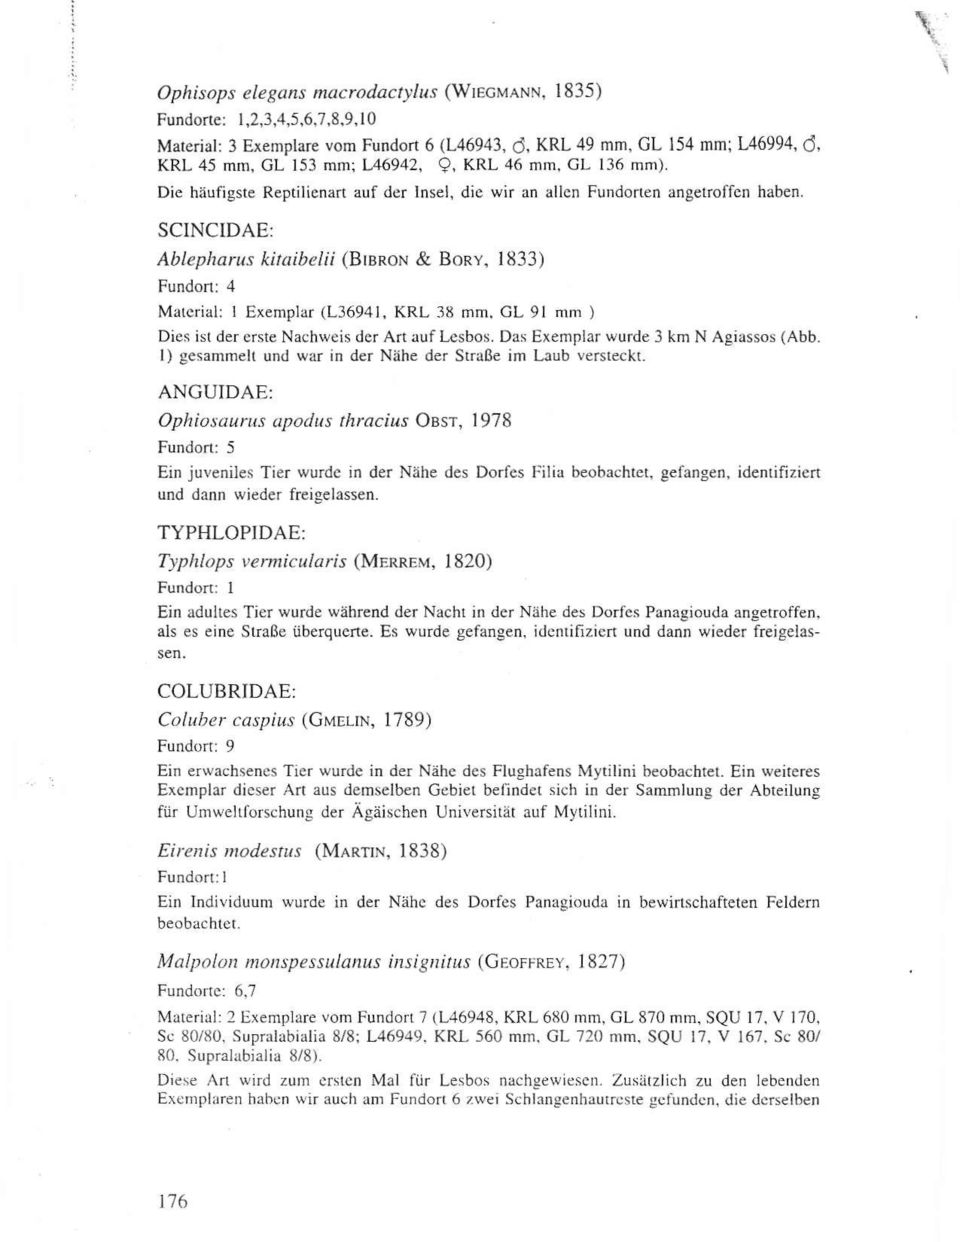 SCINCIDAE: Ablepharus kitoibelii (BtBRoN& BoRy, 1833) Fundoit:4 Material: I Exemplar (L36941, KRL 38 mm, CL 9l mm ) Dies ist der erste Nachweis der Aft auflesbos.